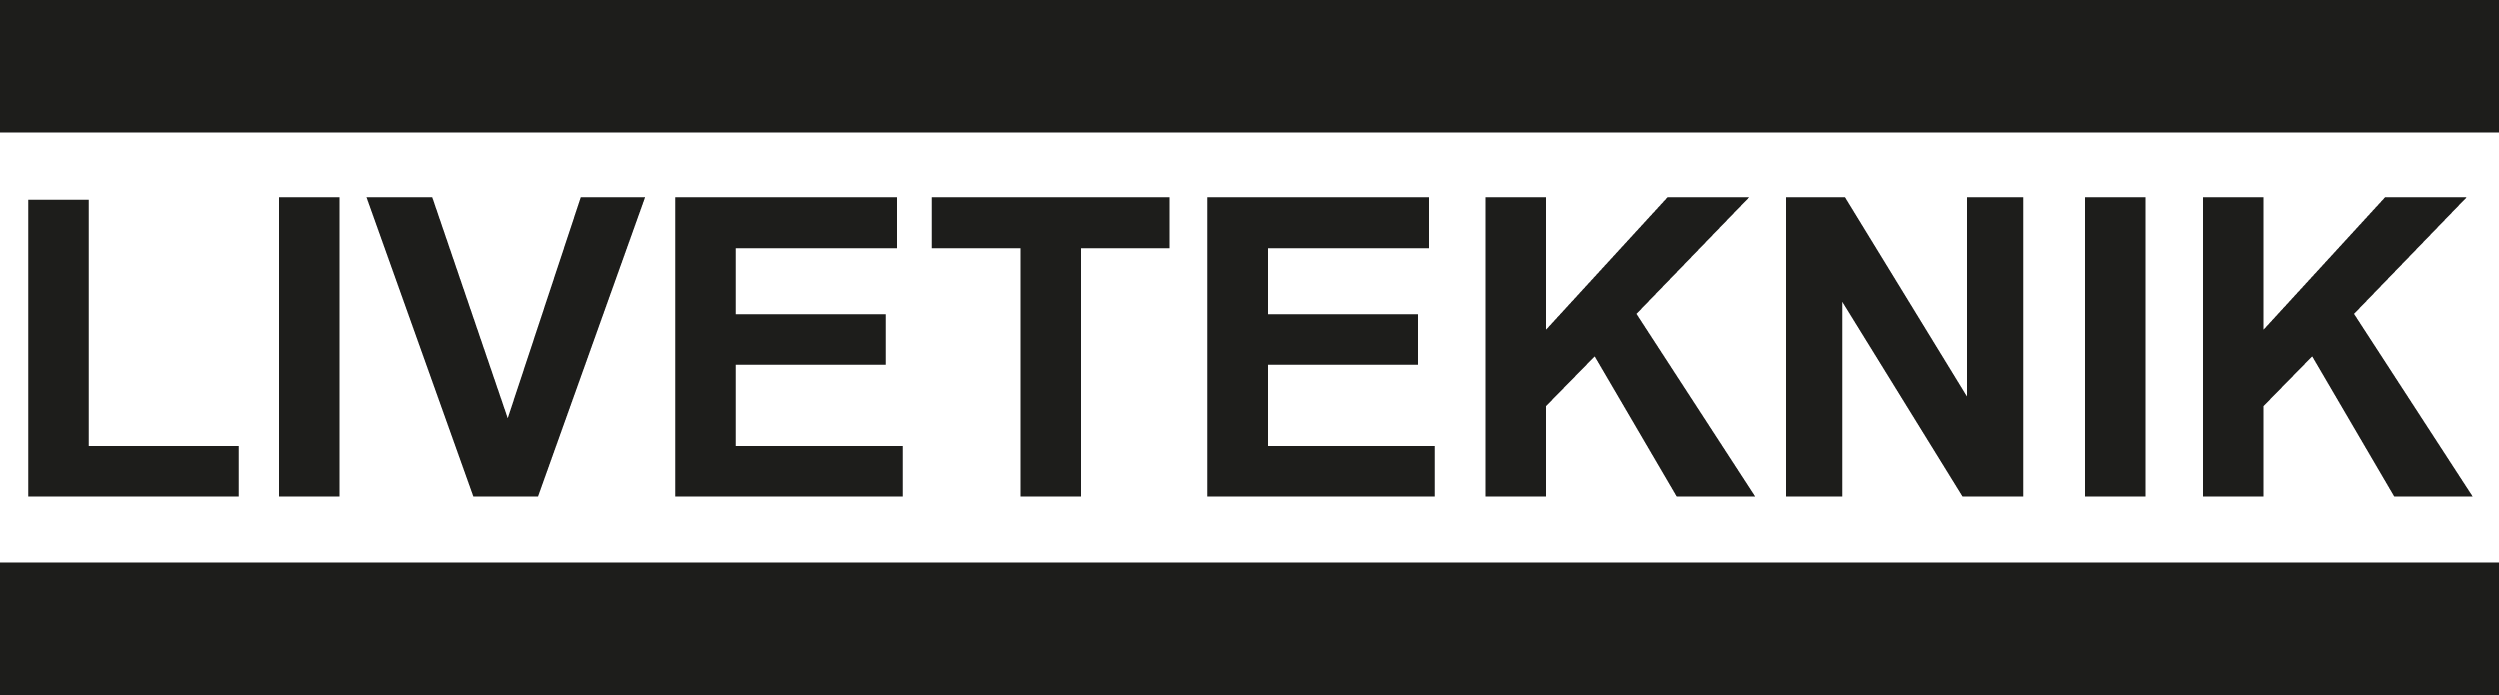 Liveteknik logotyp